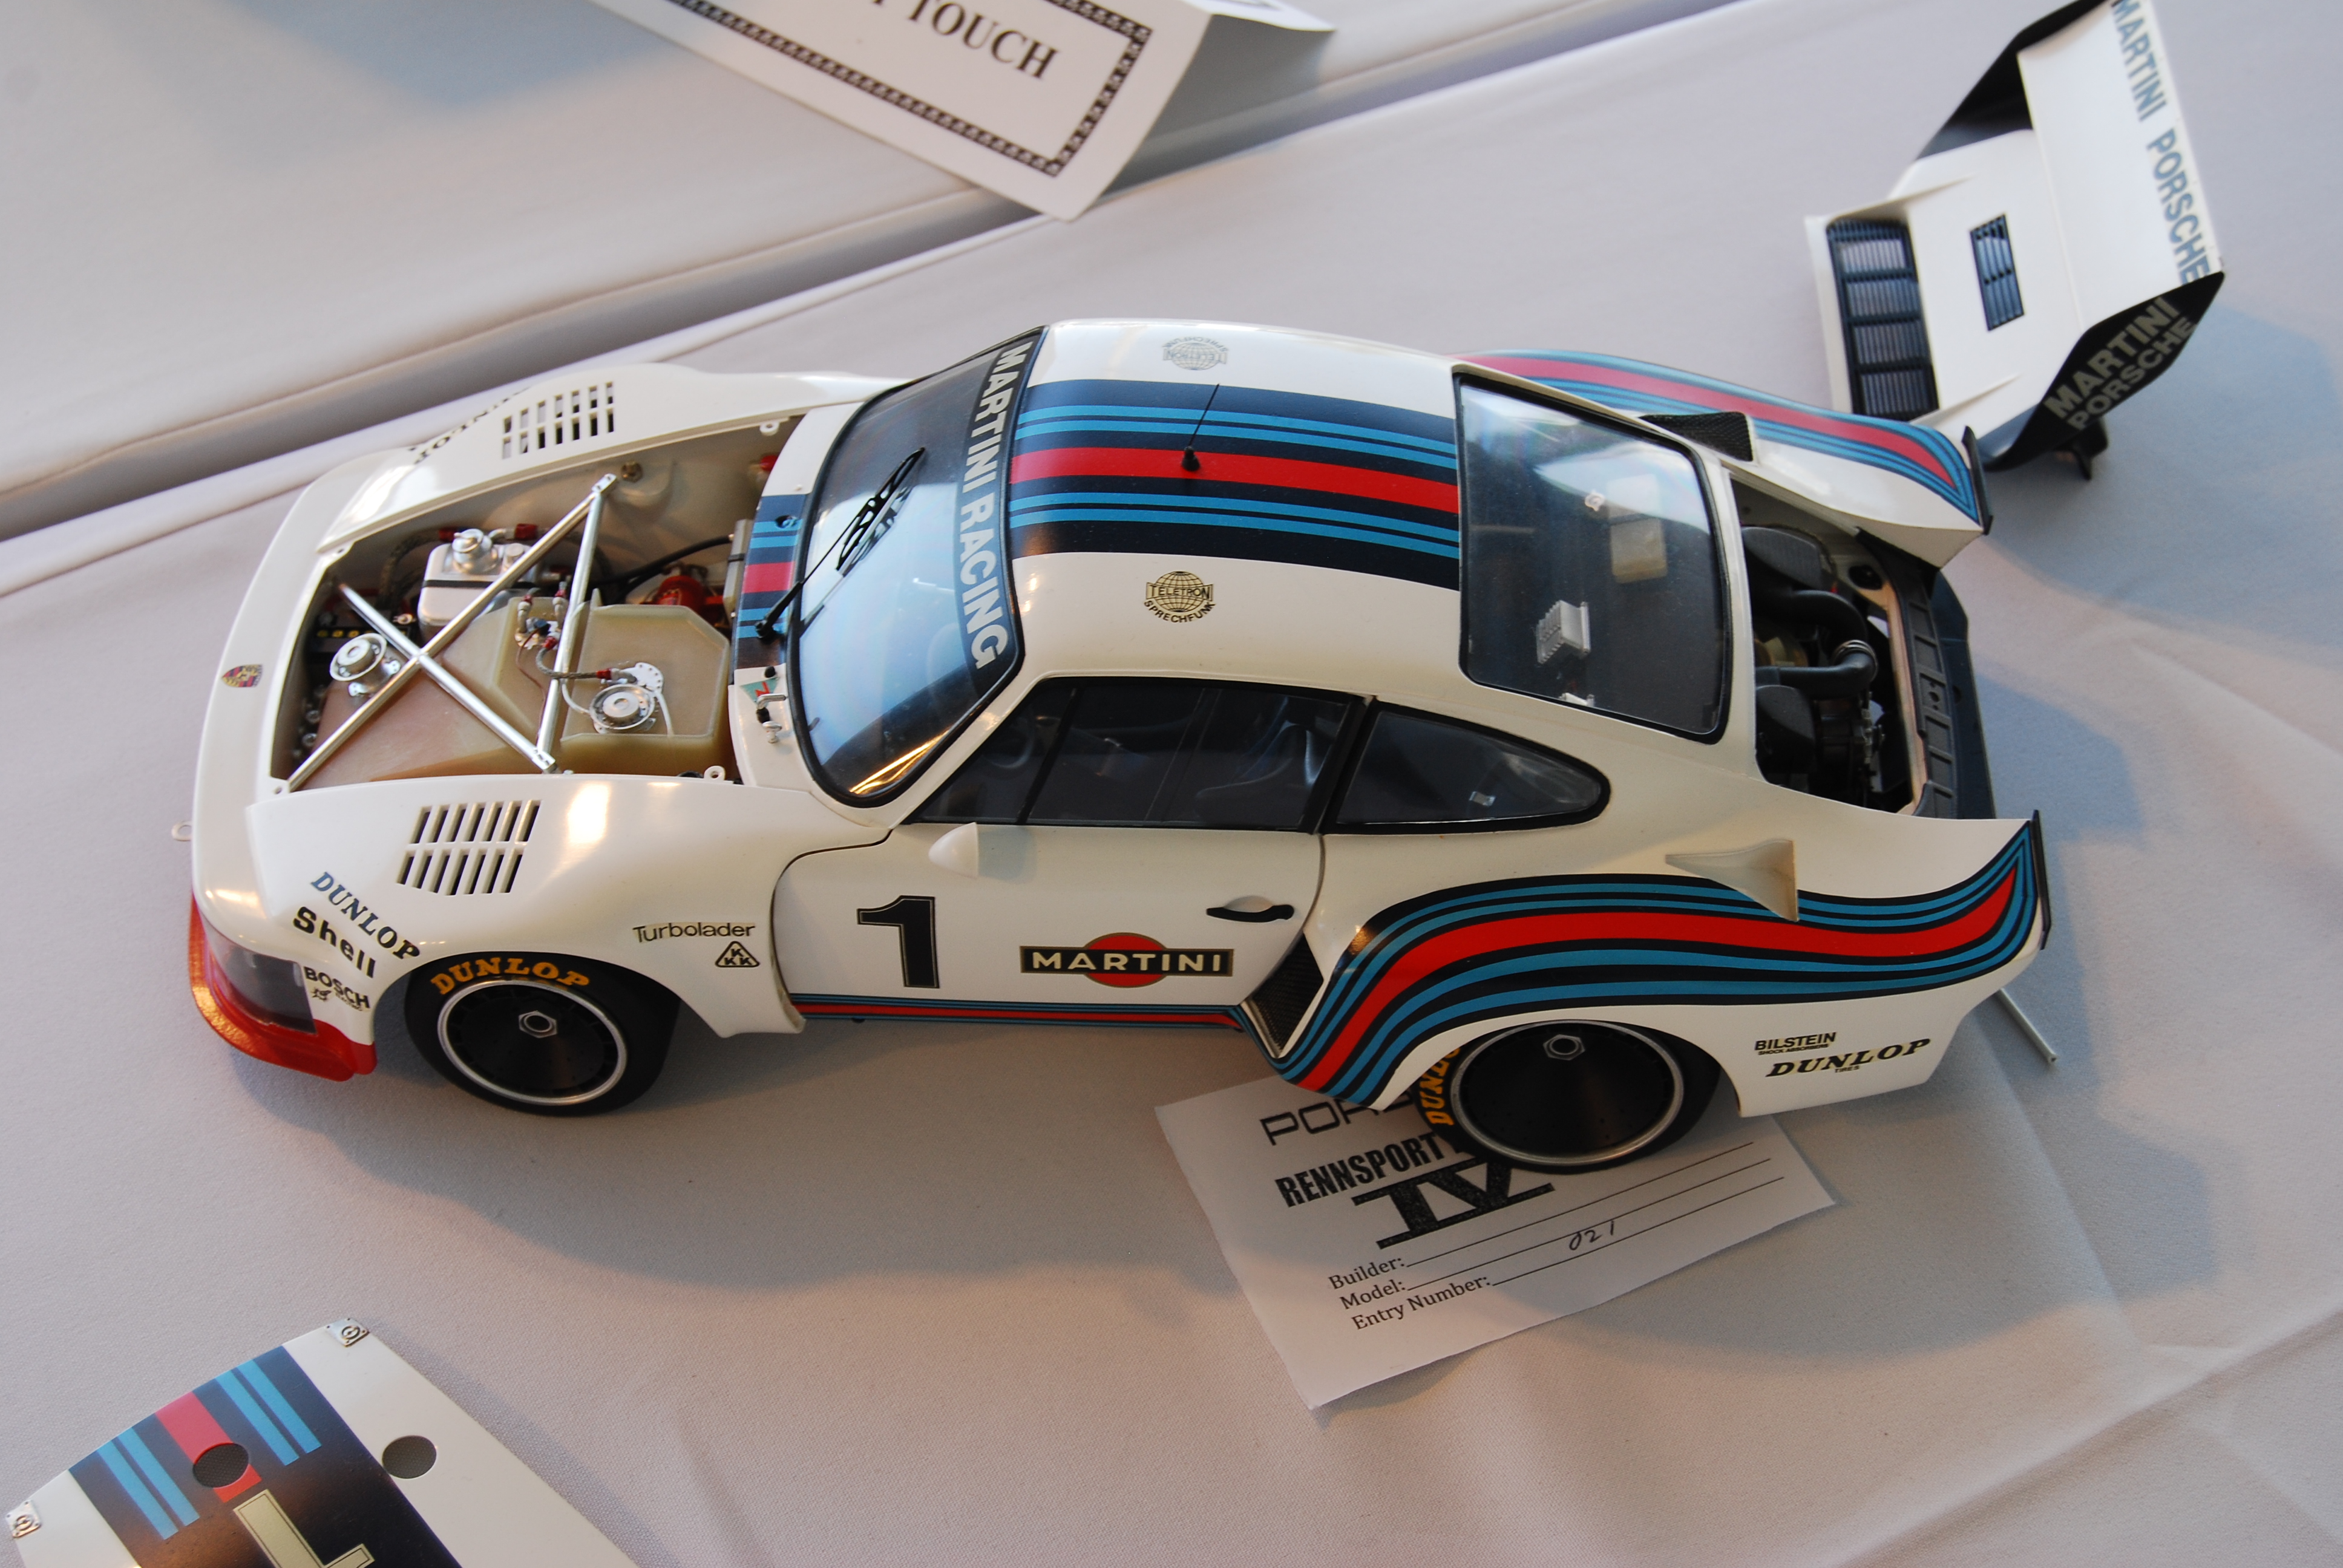 File:Flickr - wbaiv - Tamiya 1-12 Porsche 935 Martini ^ Rossi.jpg -  Wikimedia Commons